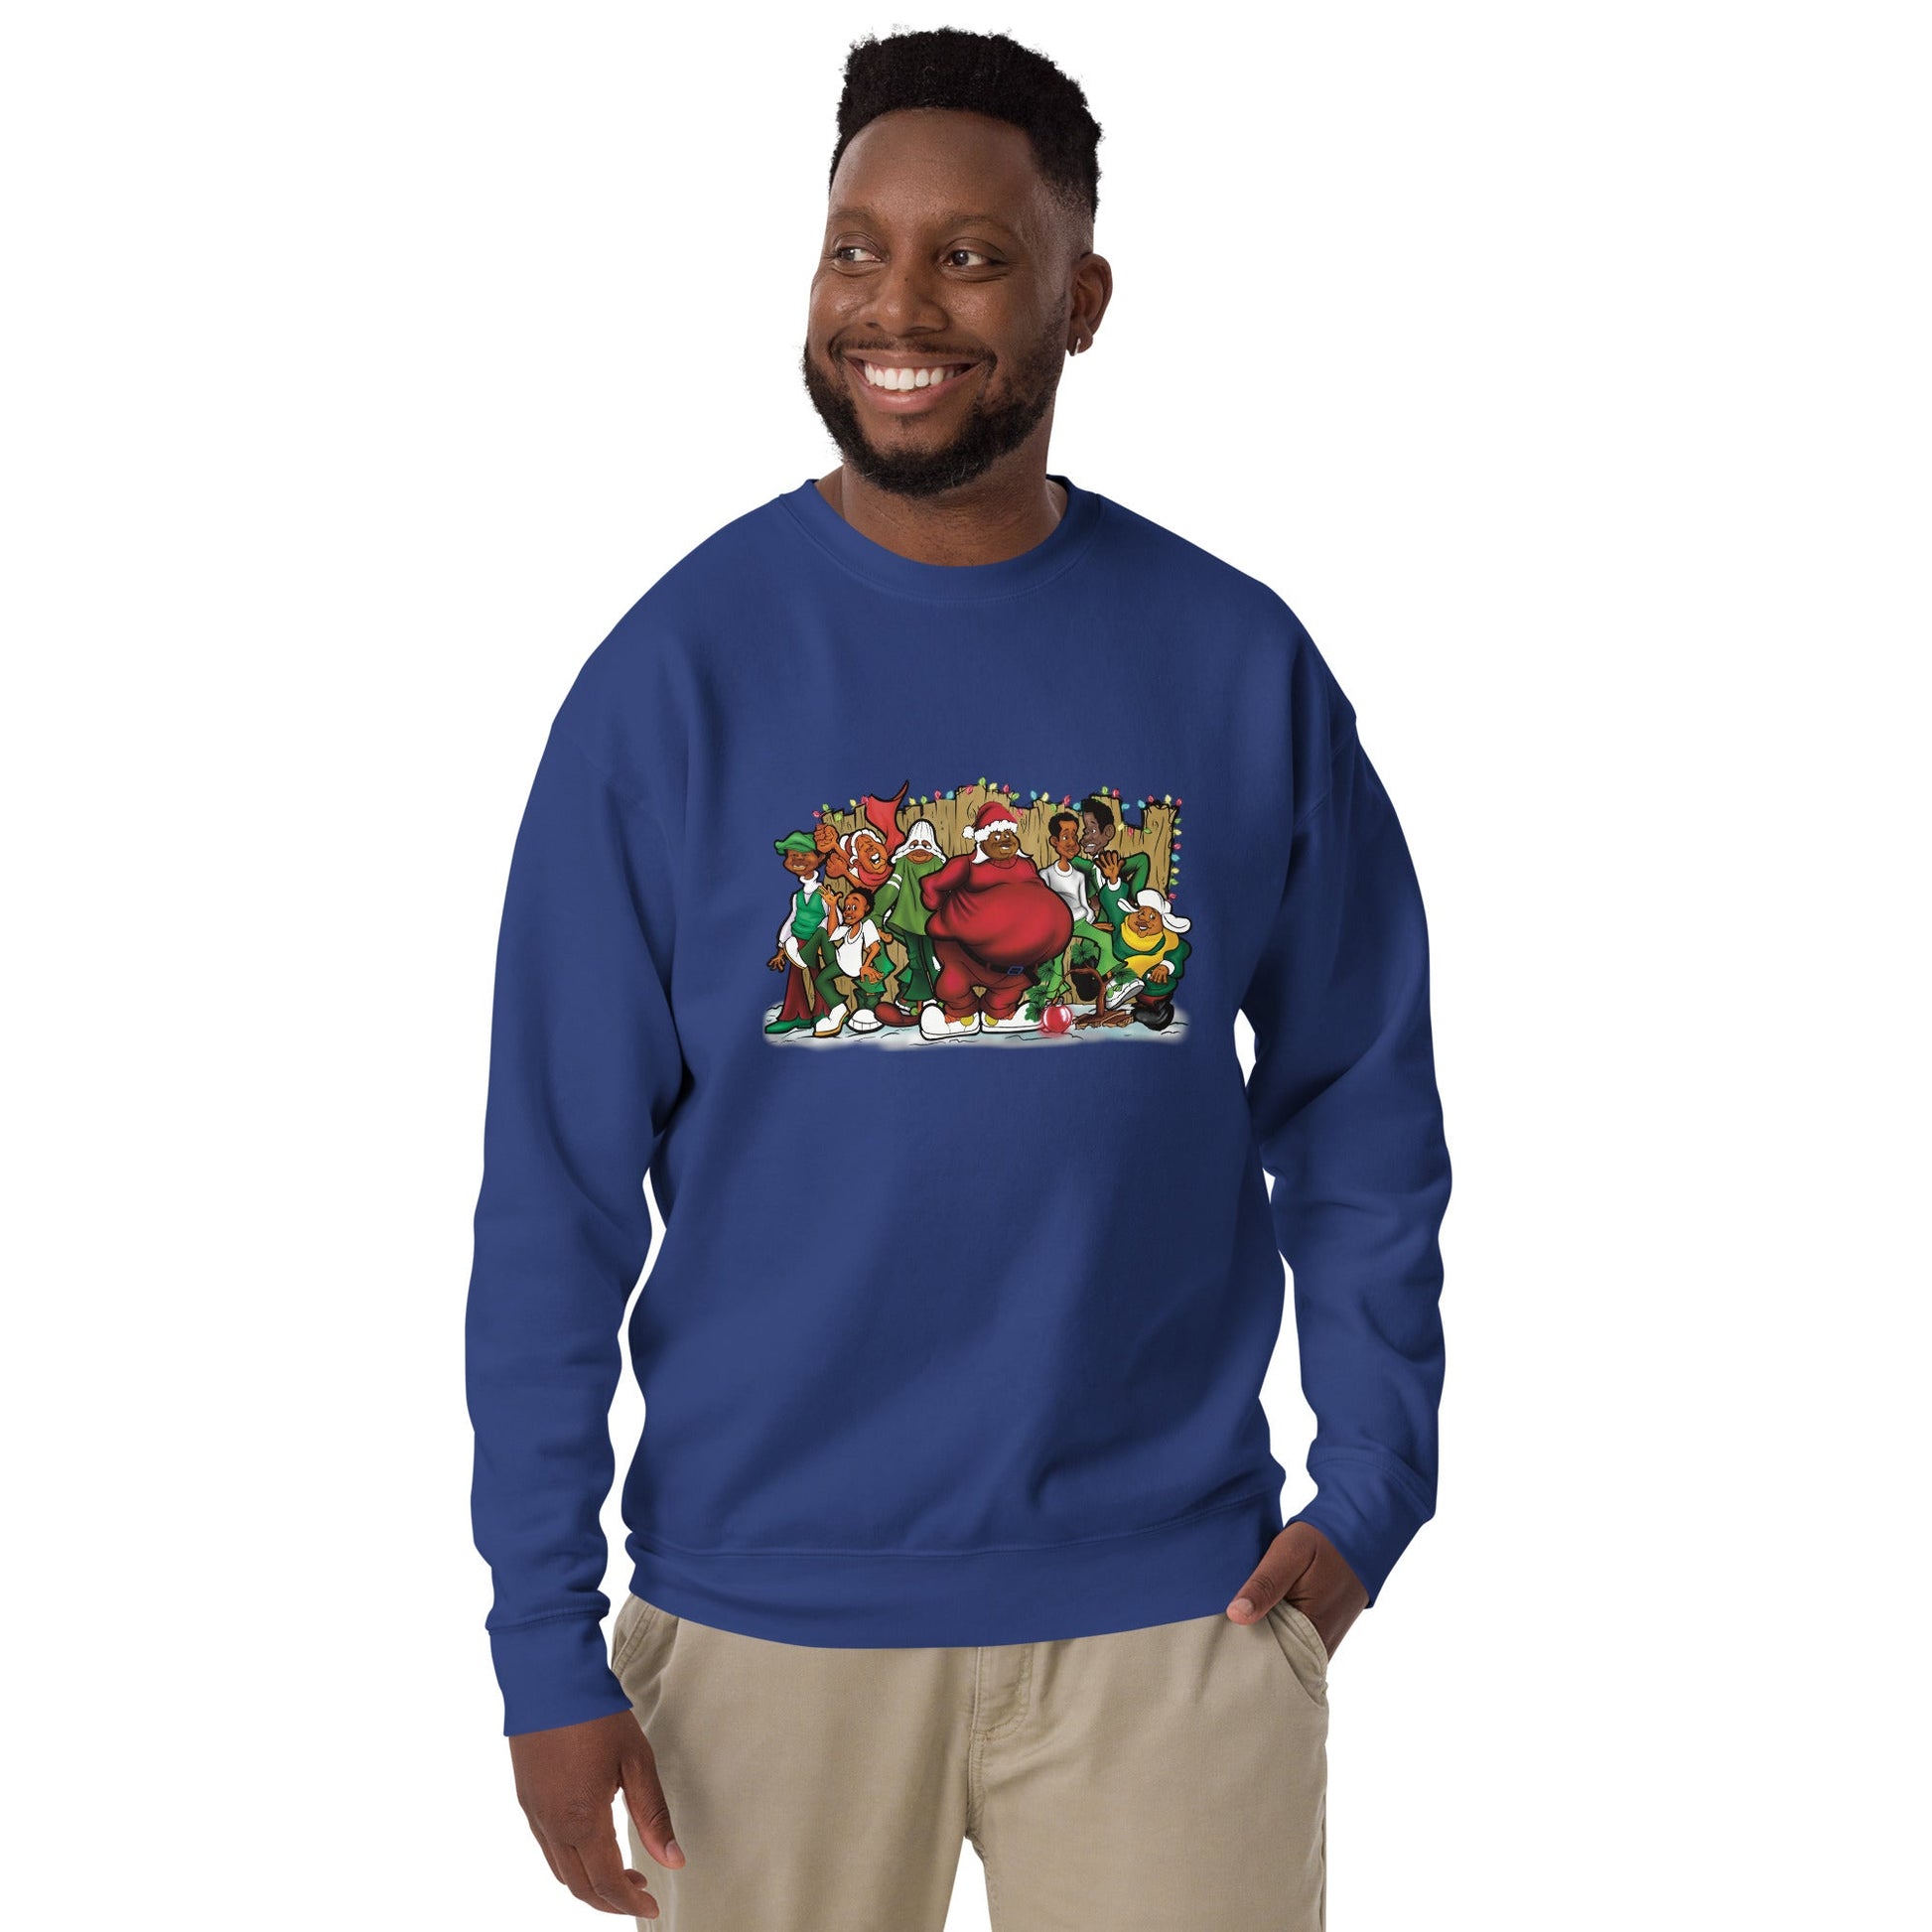 Fat Albert and Friends Christmas Unisex Sweatshirt - smuniqueshirts